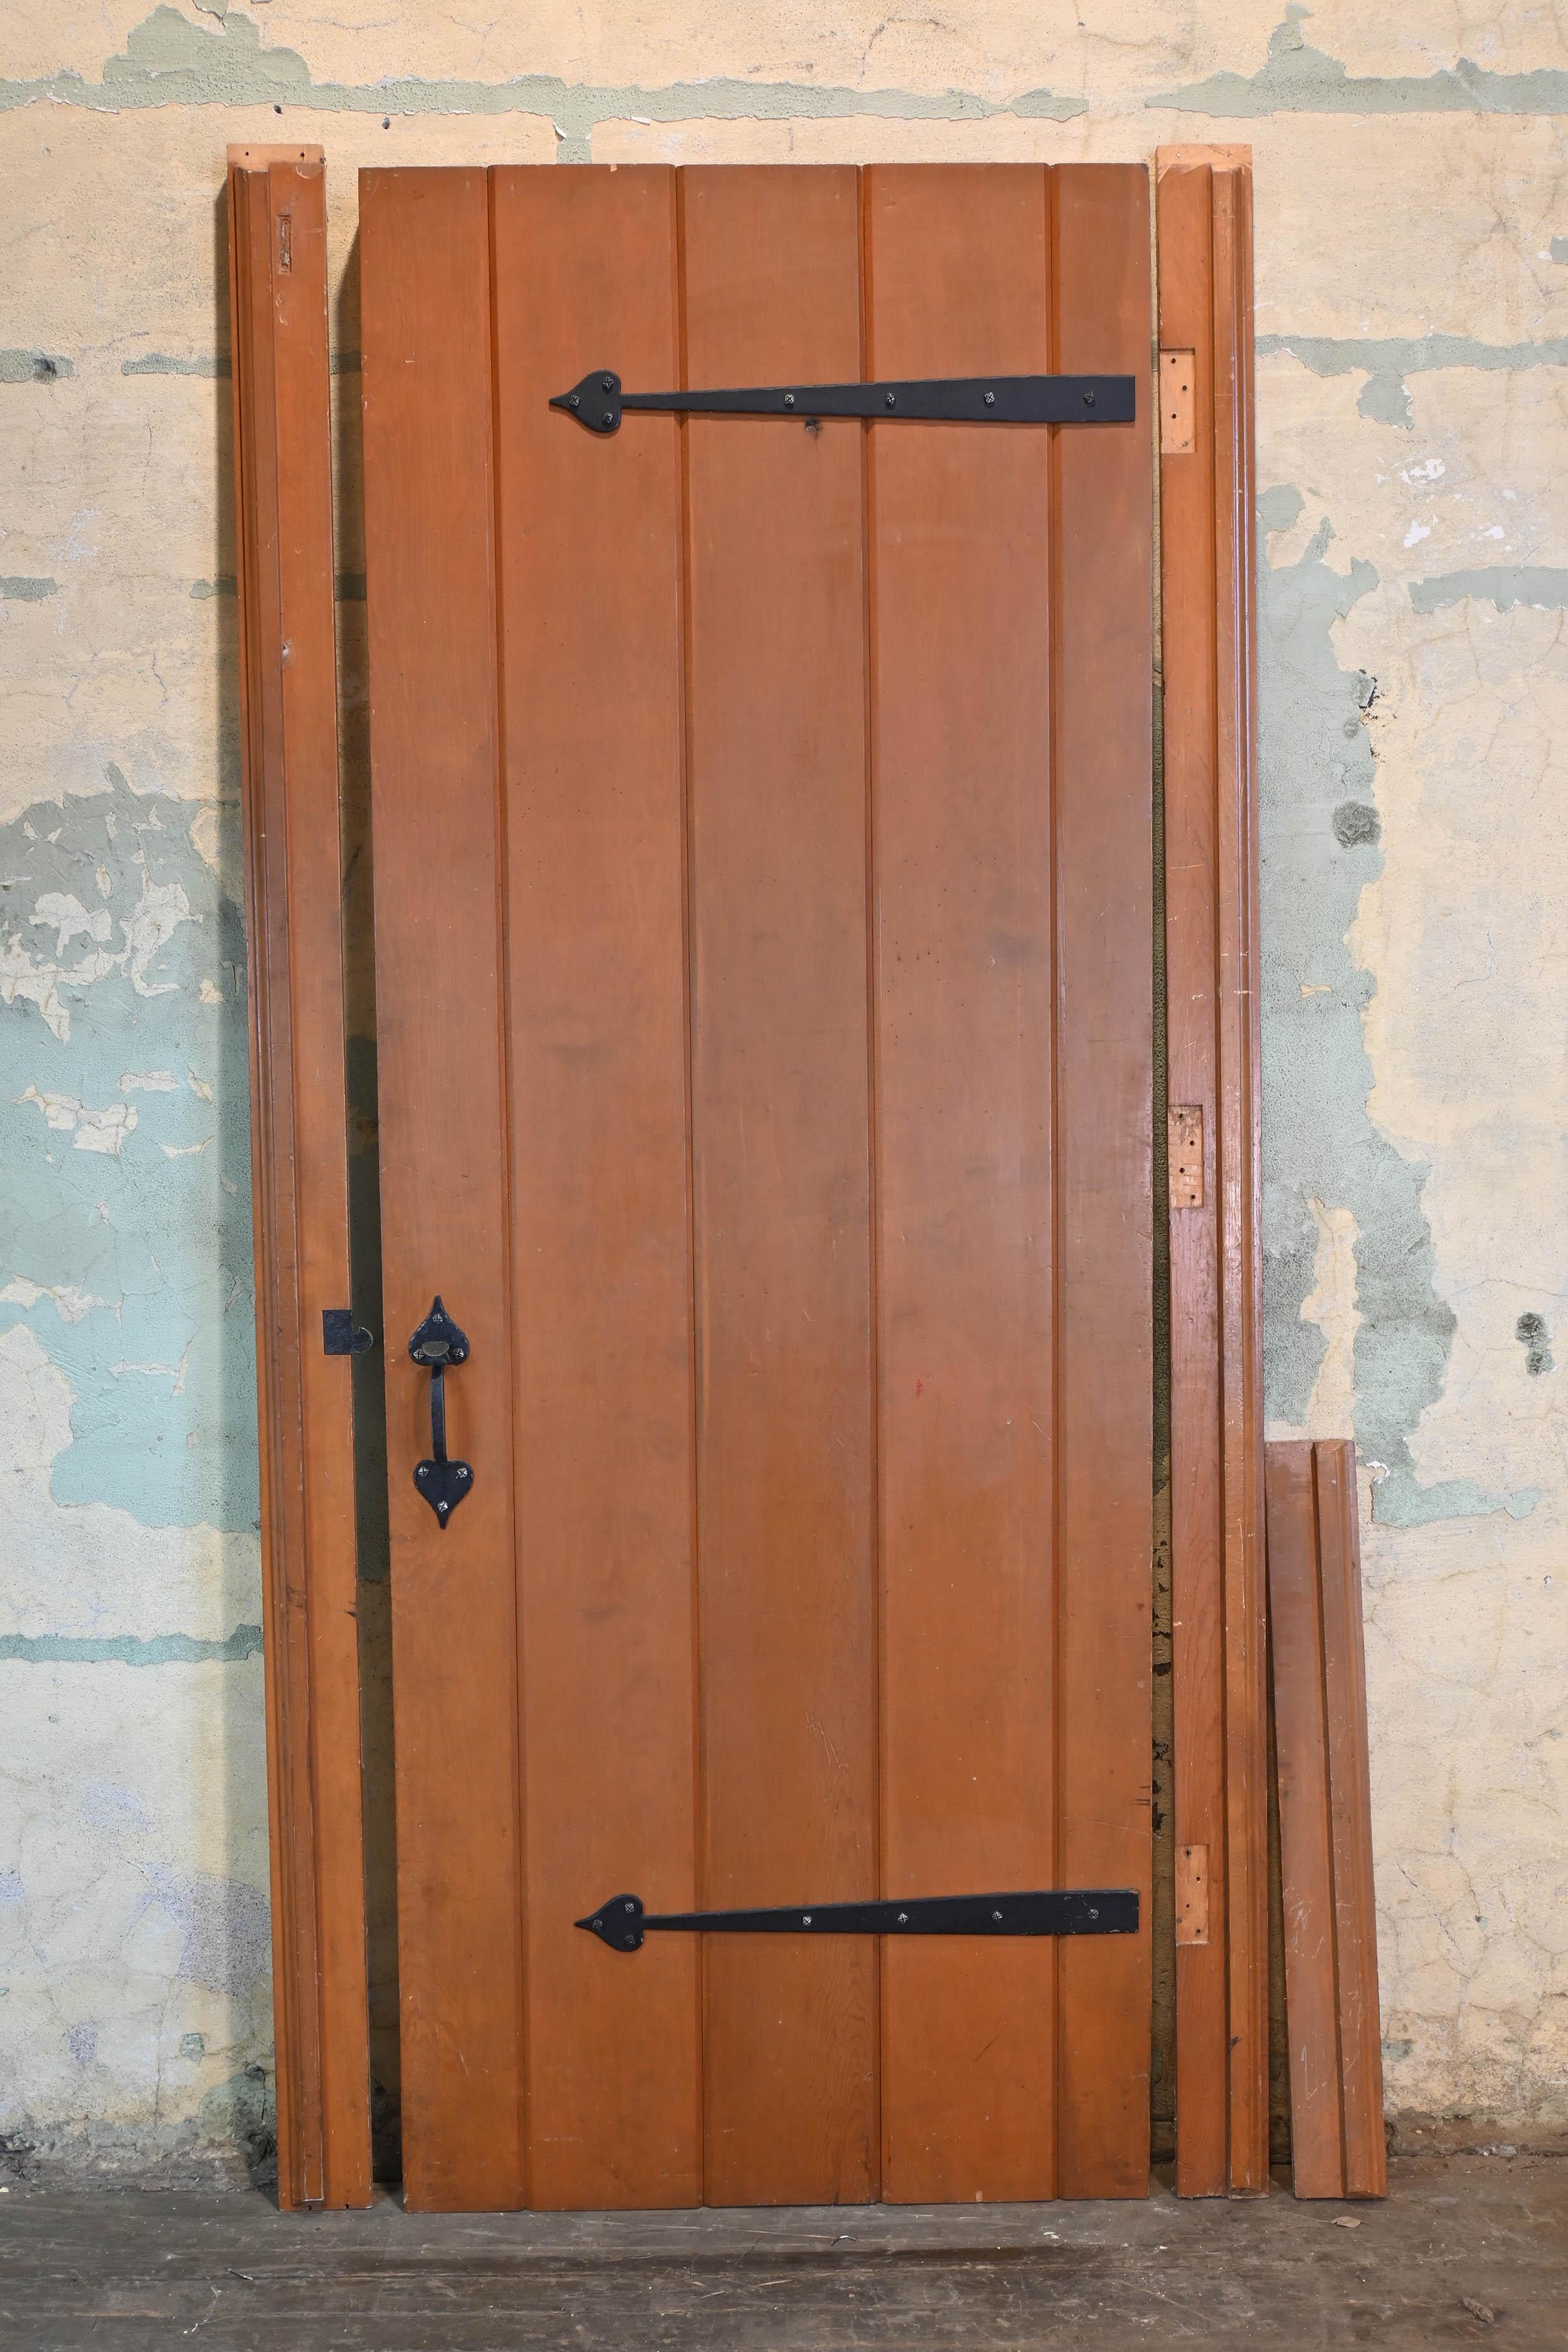 20th Century Panel Cellar Door, Jamb and Original Thumb Latch Lift Hardware